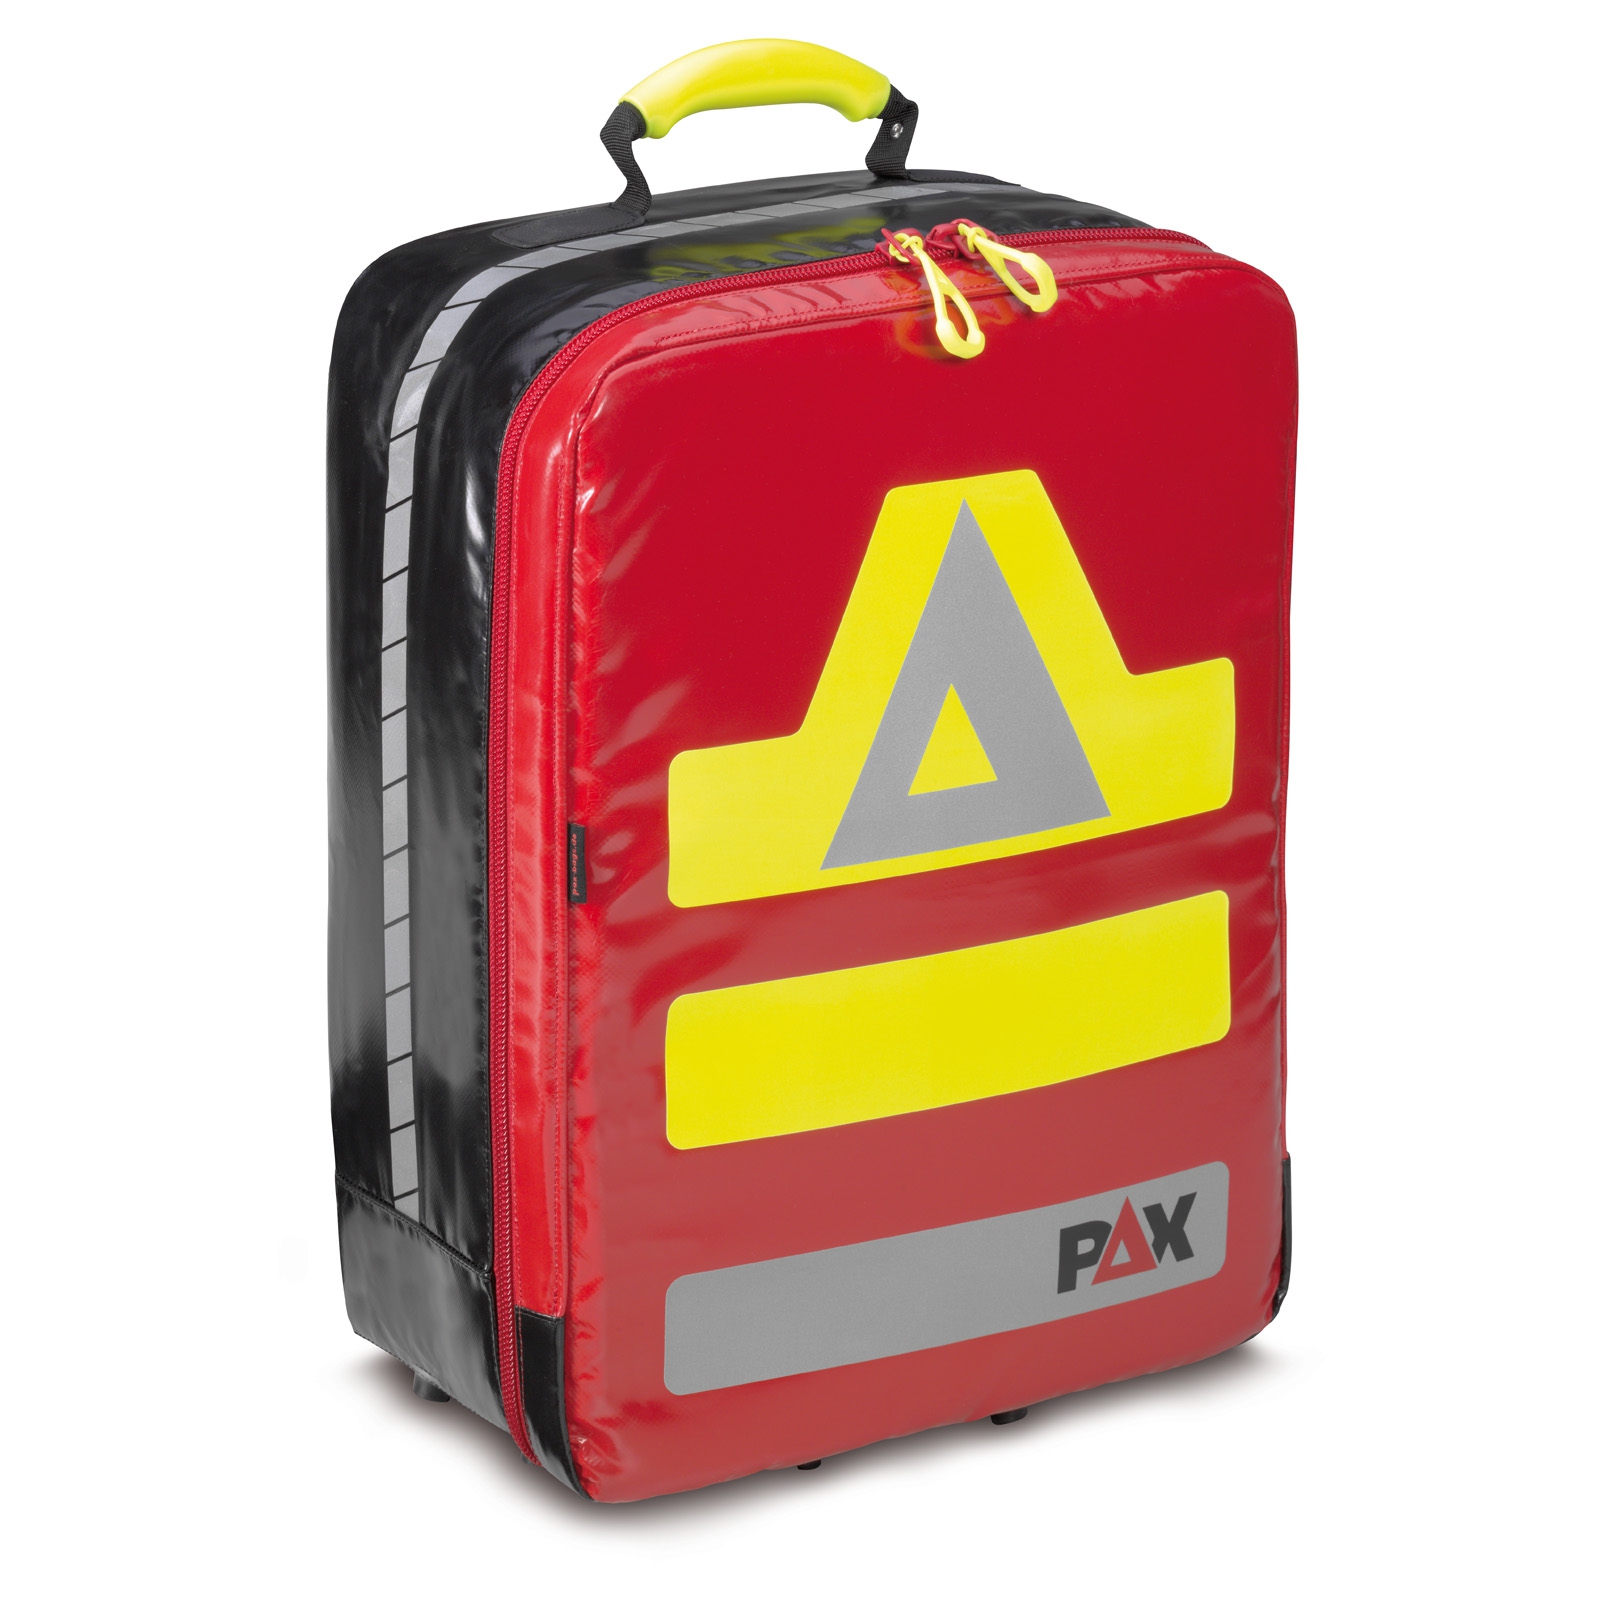 Rapid response team backpack Pax-plan